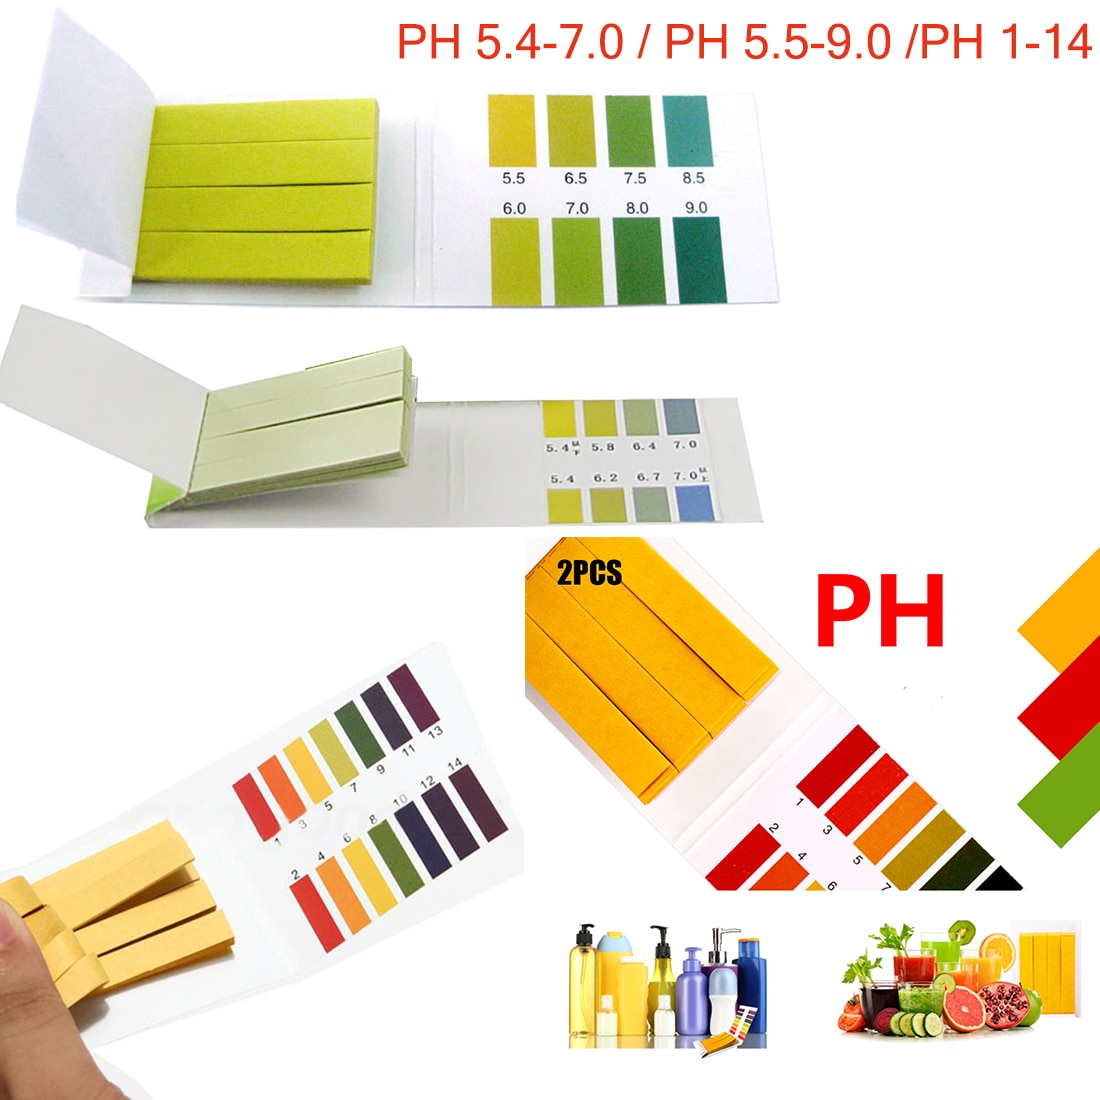 Ph 5.4-7.0, Ph 5.5-9.0, ph 1 -14 Alkaline Test Papers Strips Indicator Lab Levert Litmus Testing Kit Voor Plant,Water 80 Strips